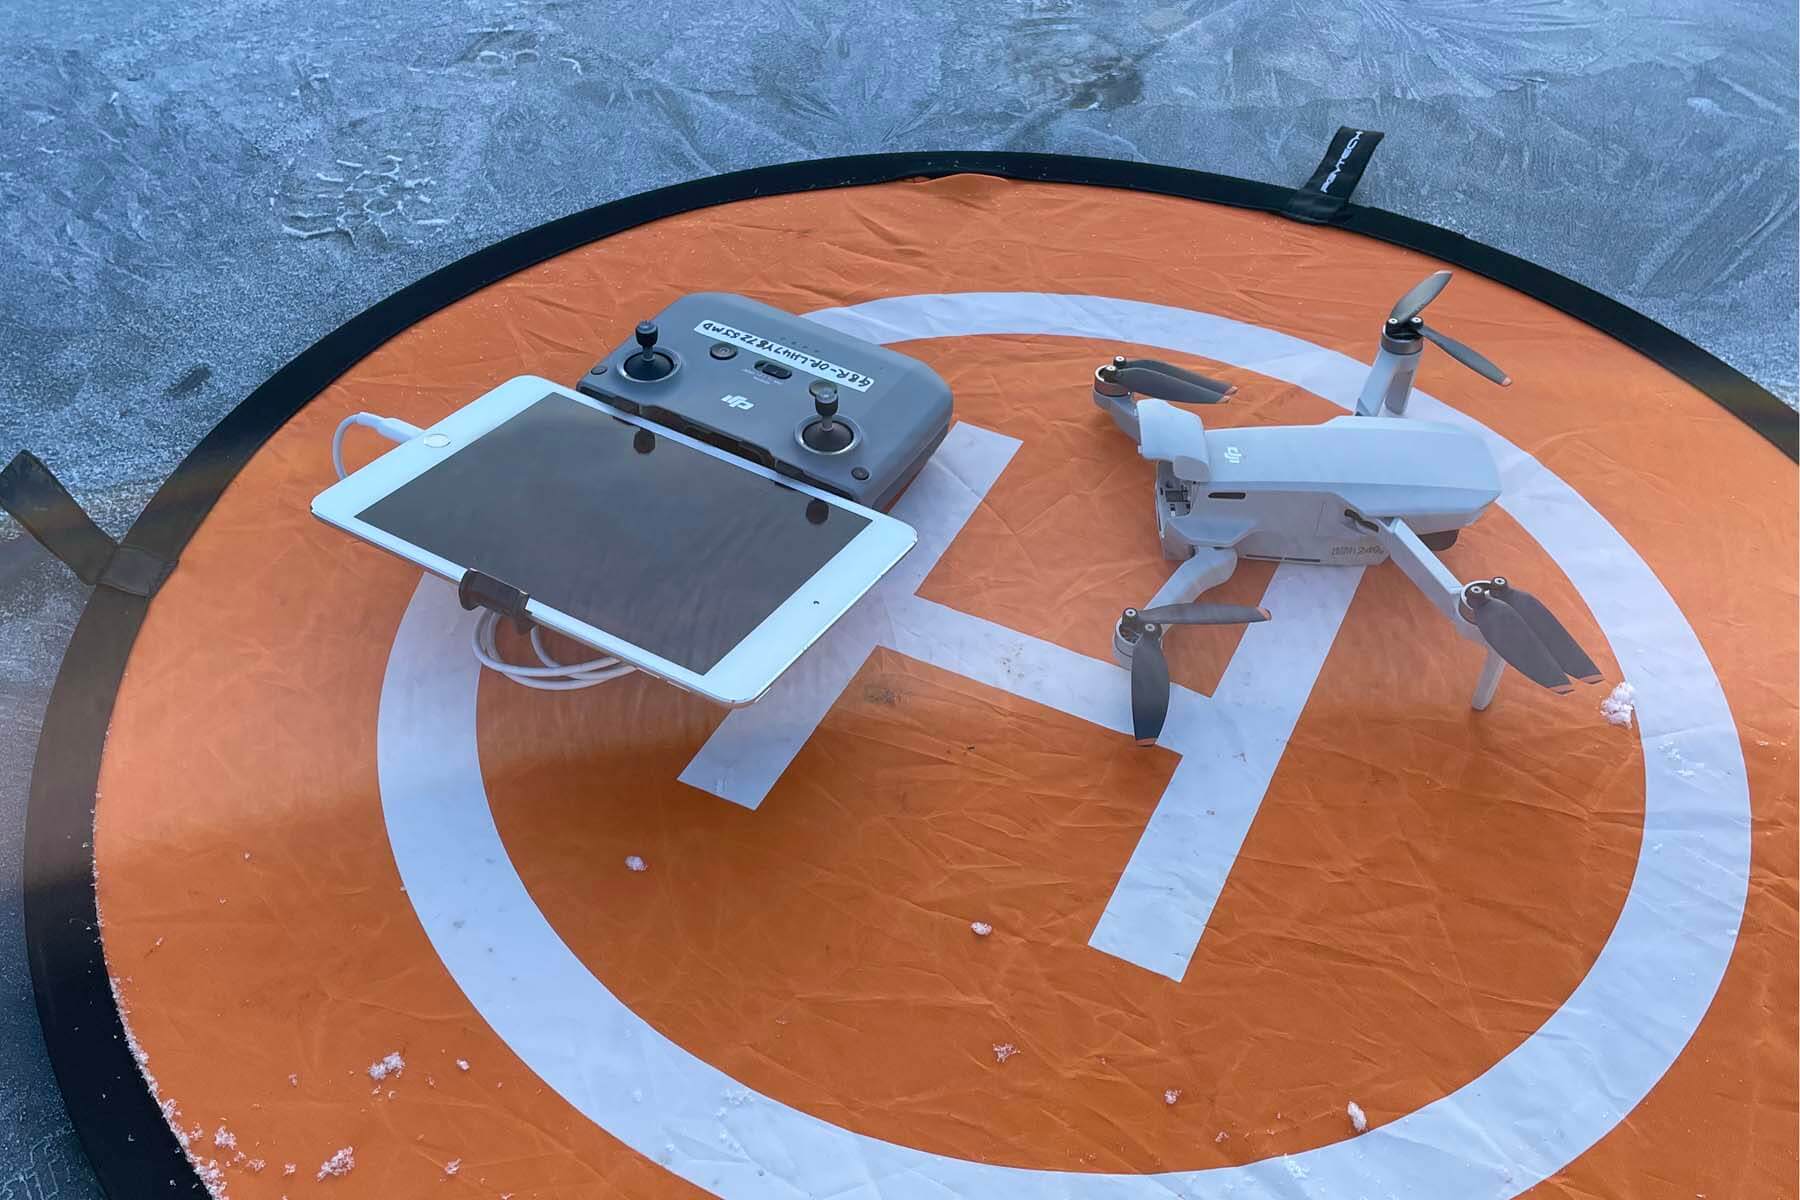 Drone on orange helipad